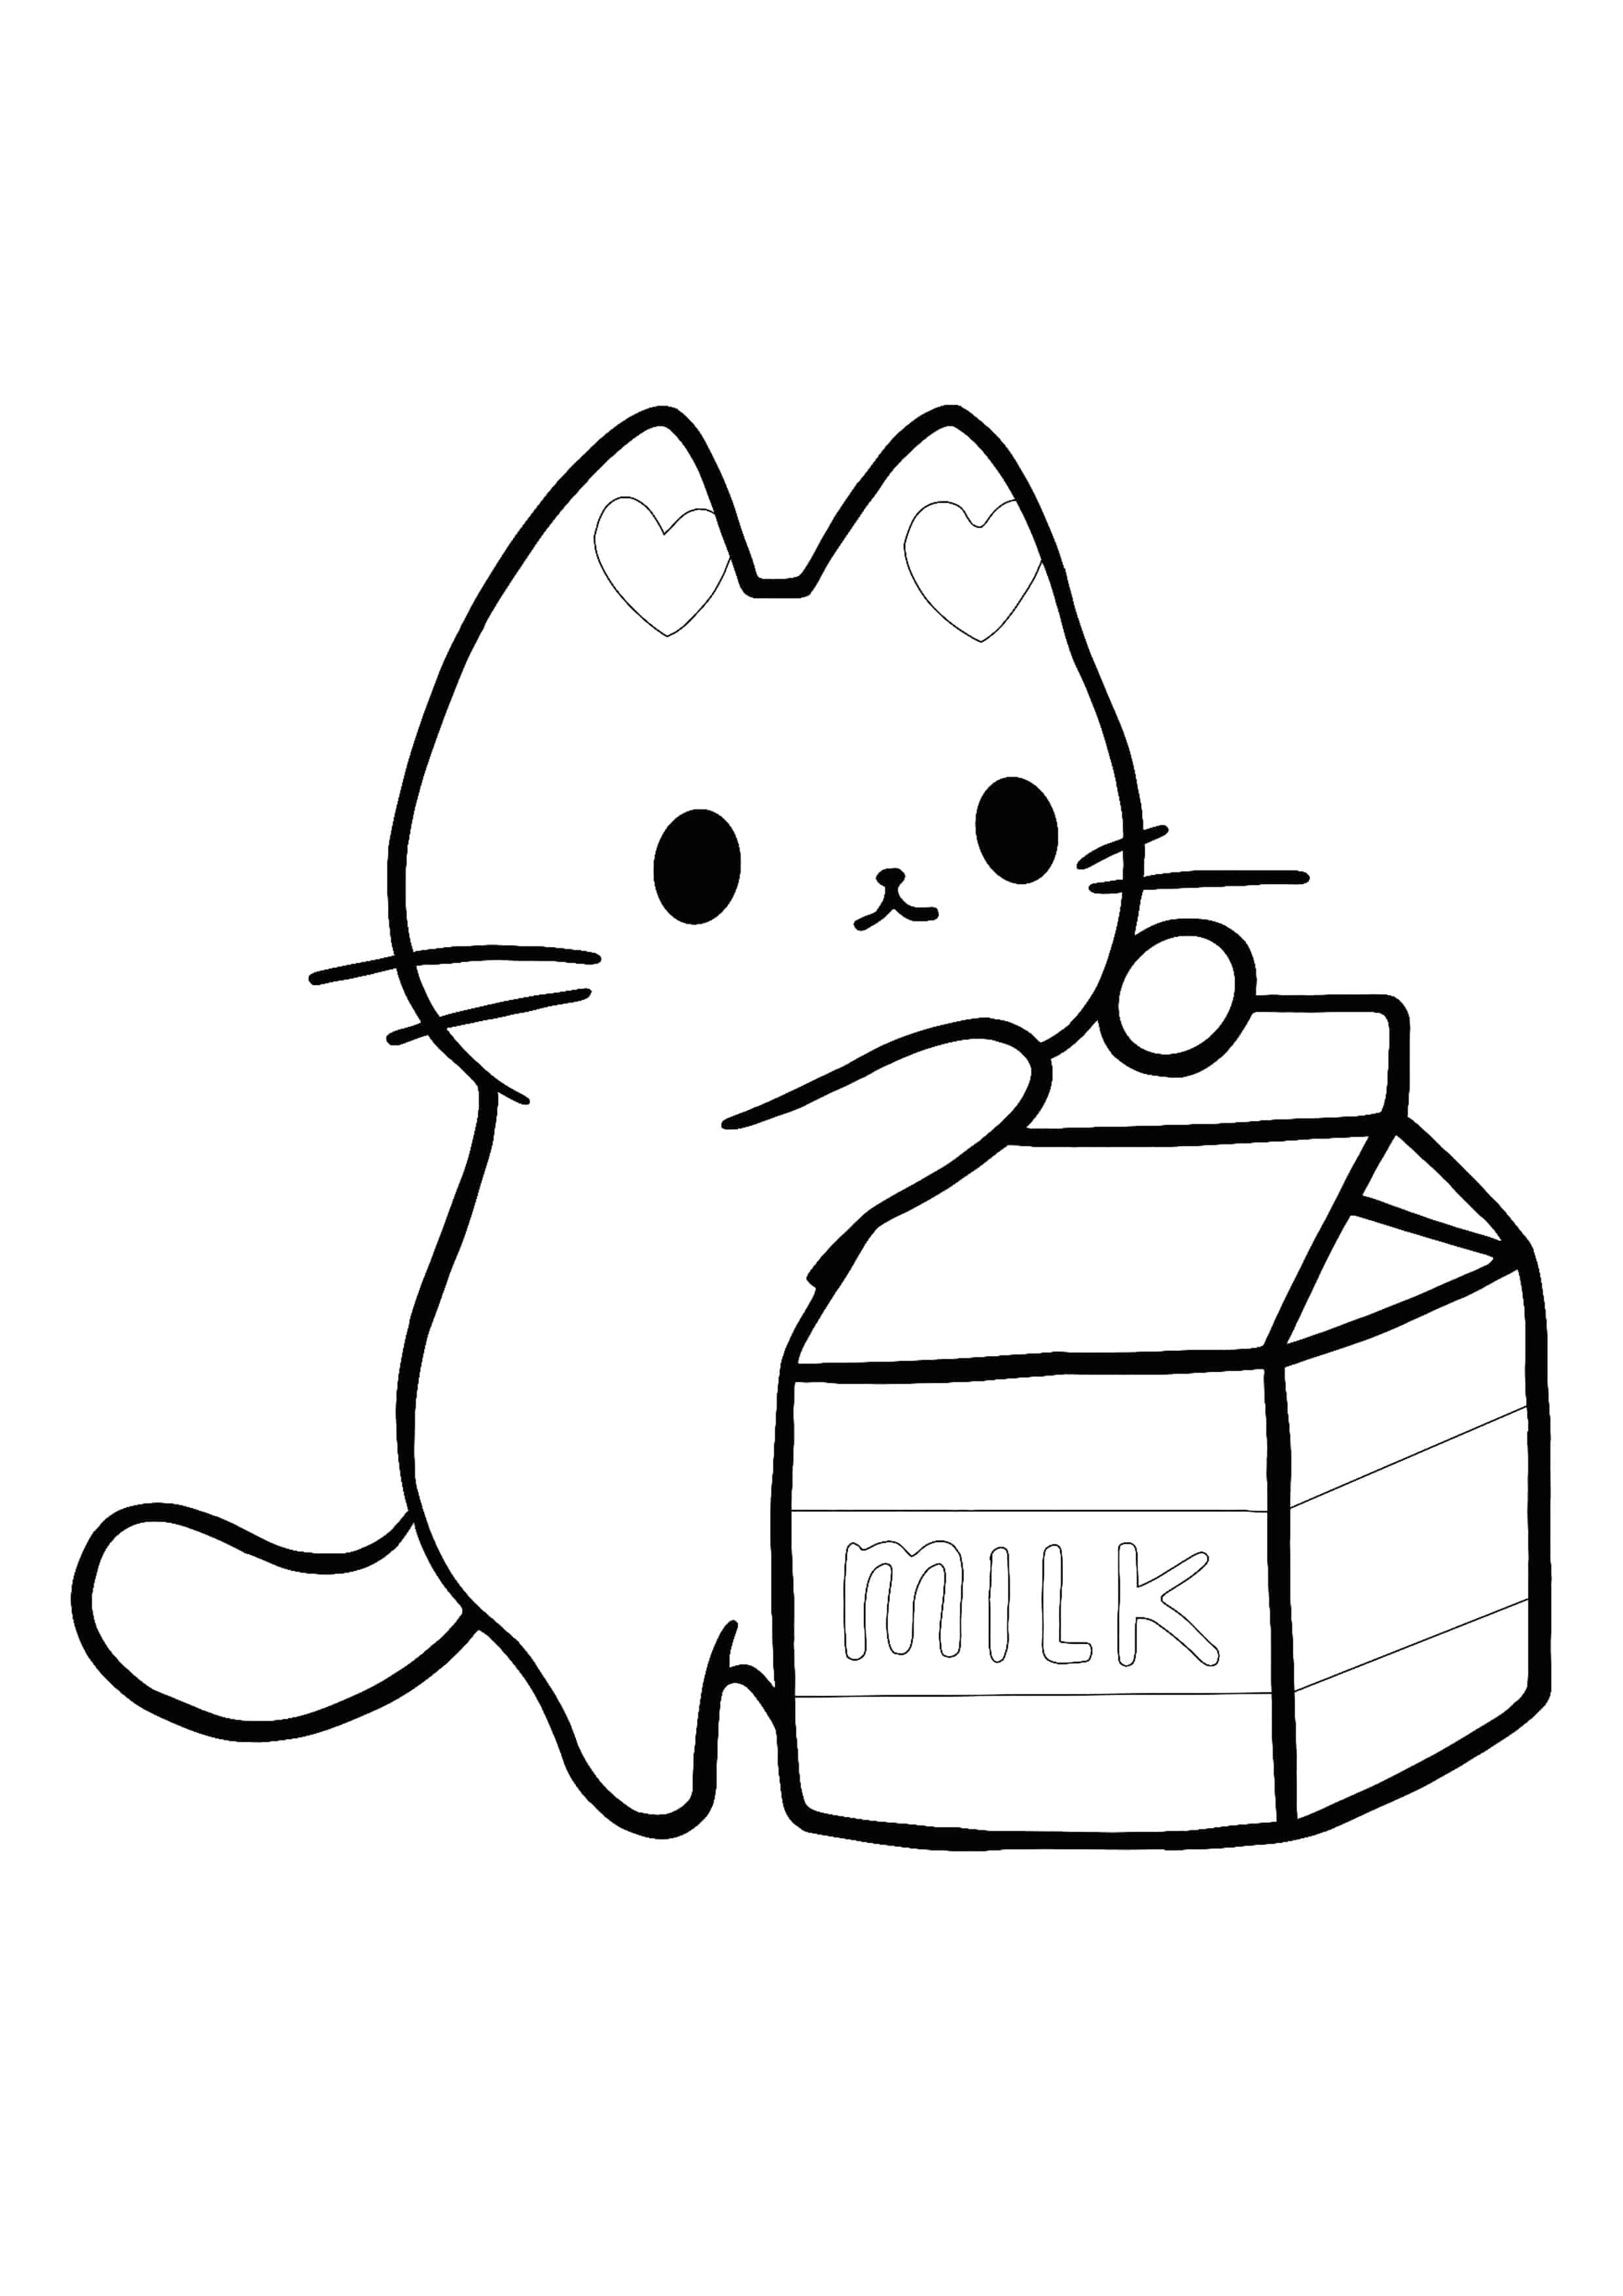 Kawaii kitten coloring page desenhos fofos para colorir desenhos animados para colorir desenhos lindos para colorir